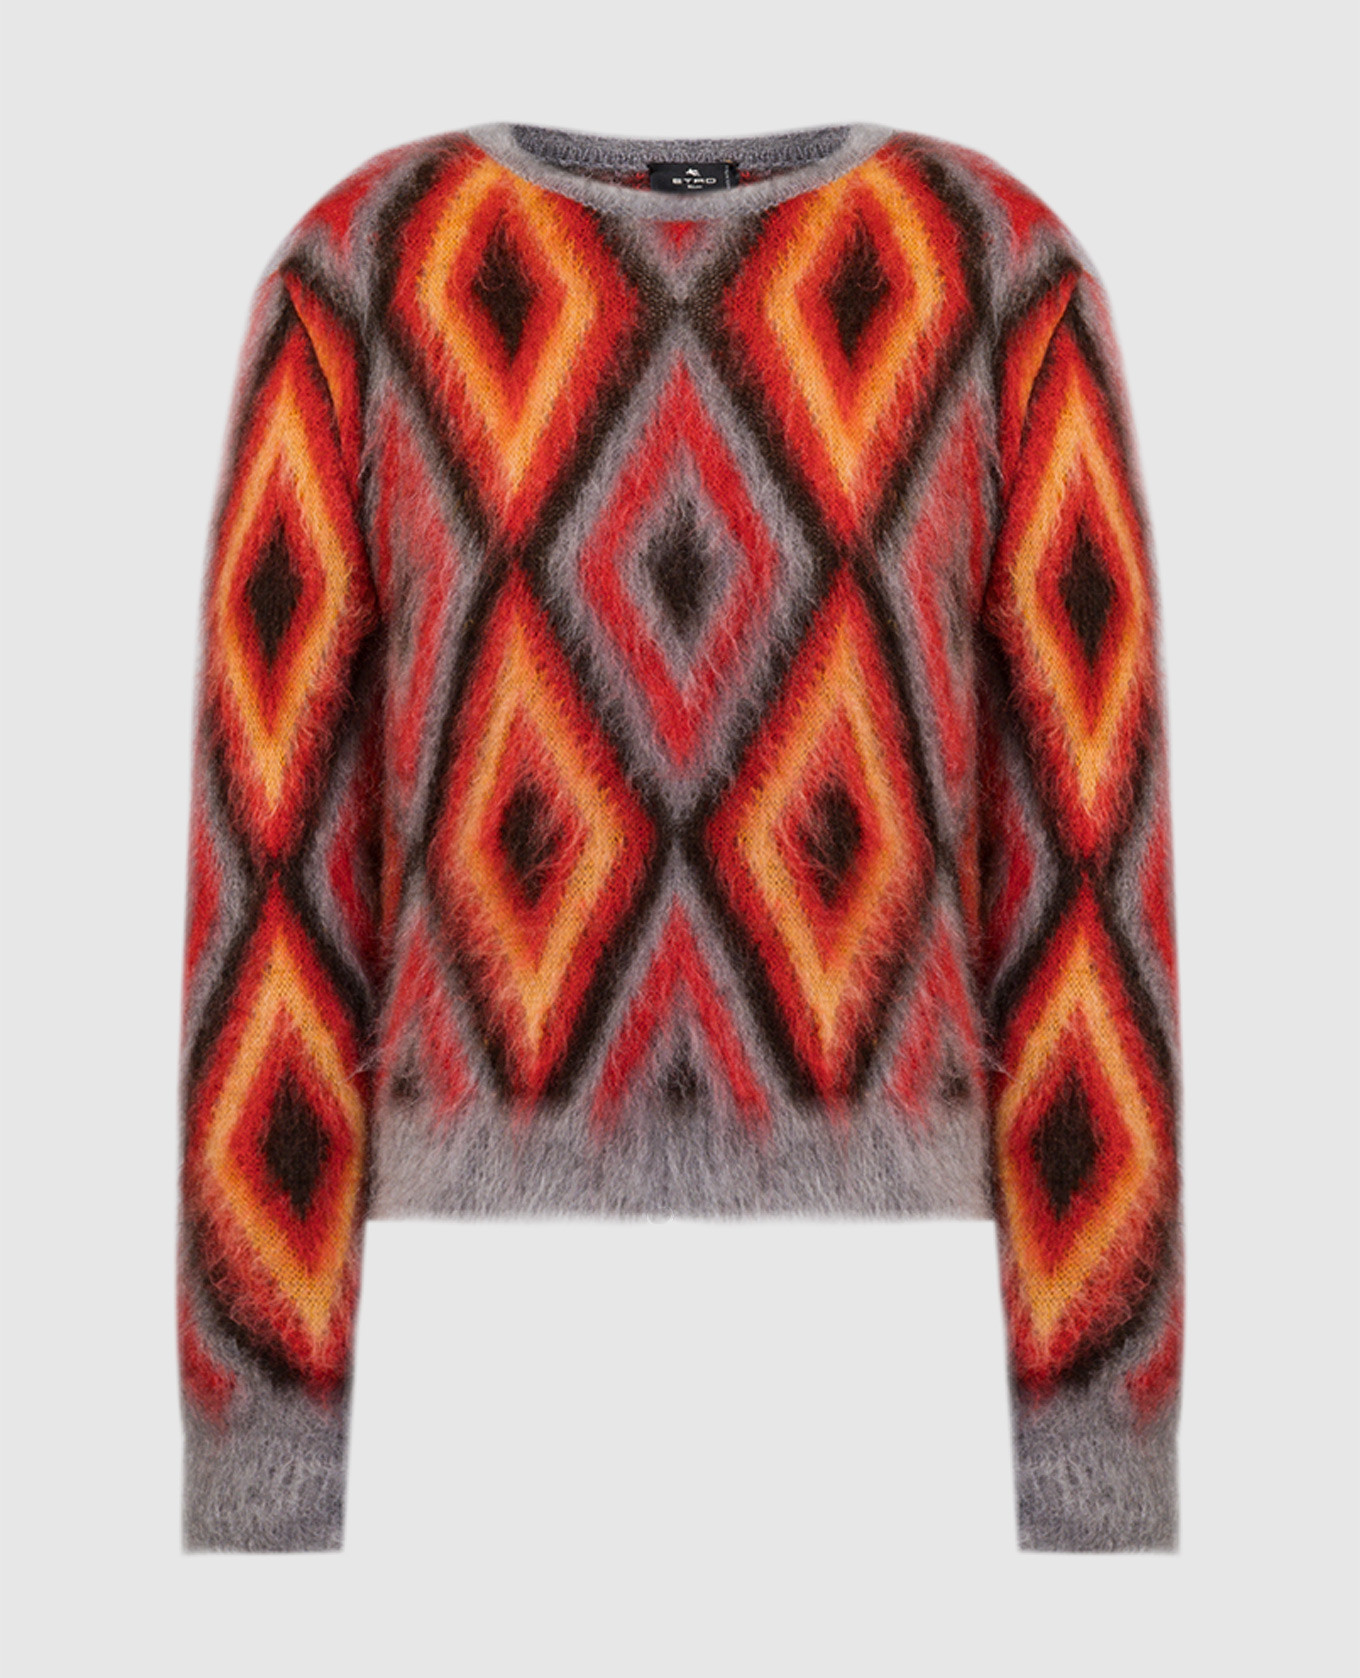 Red sweater in a geometric pattern